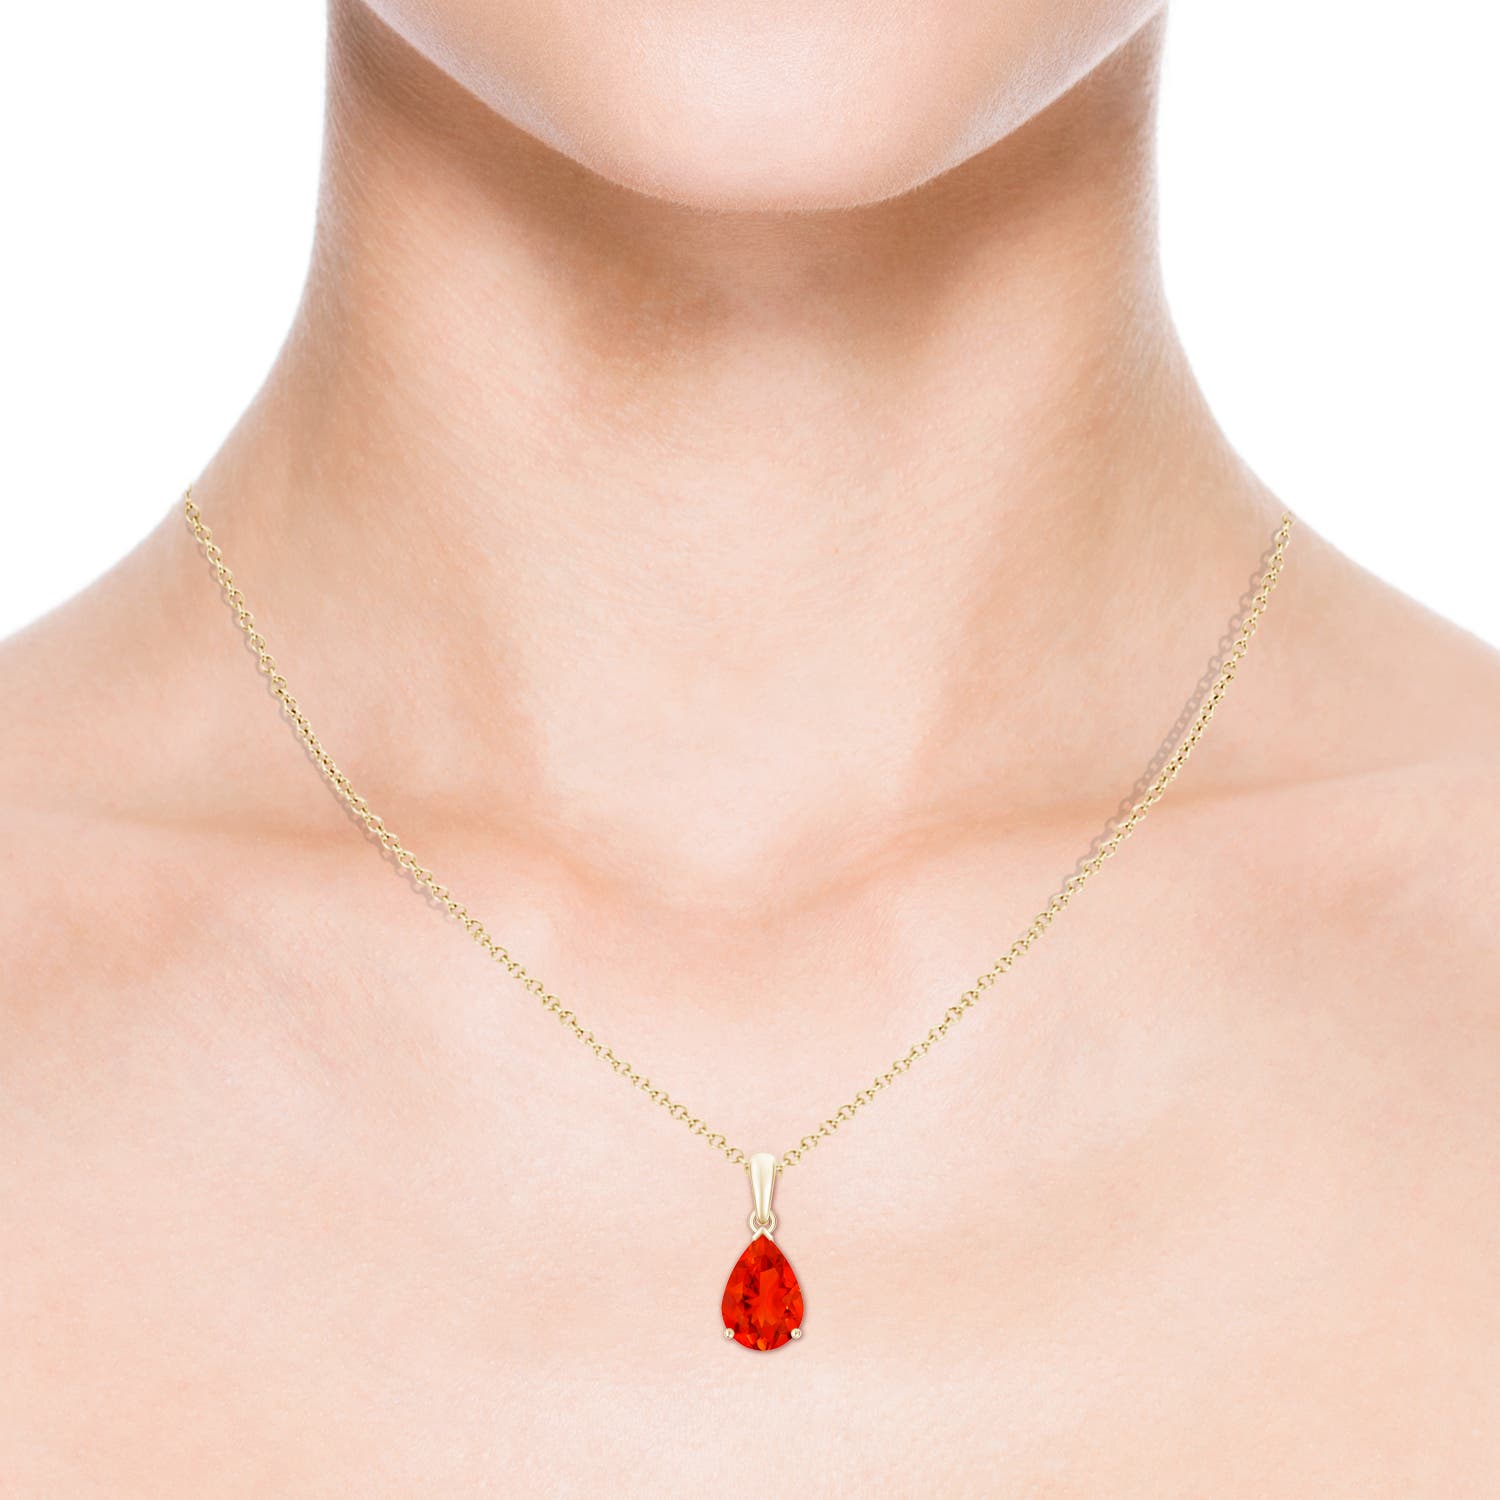 Shop Fire Opal Pendant Necklaces for Women | Angara